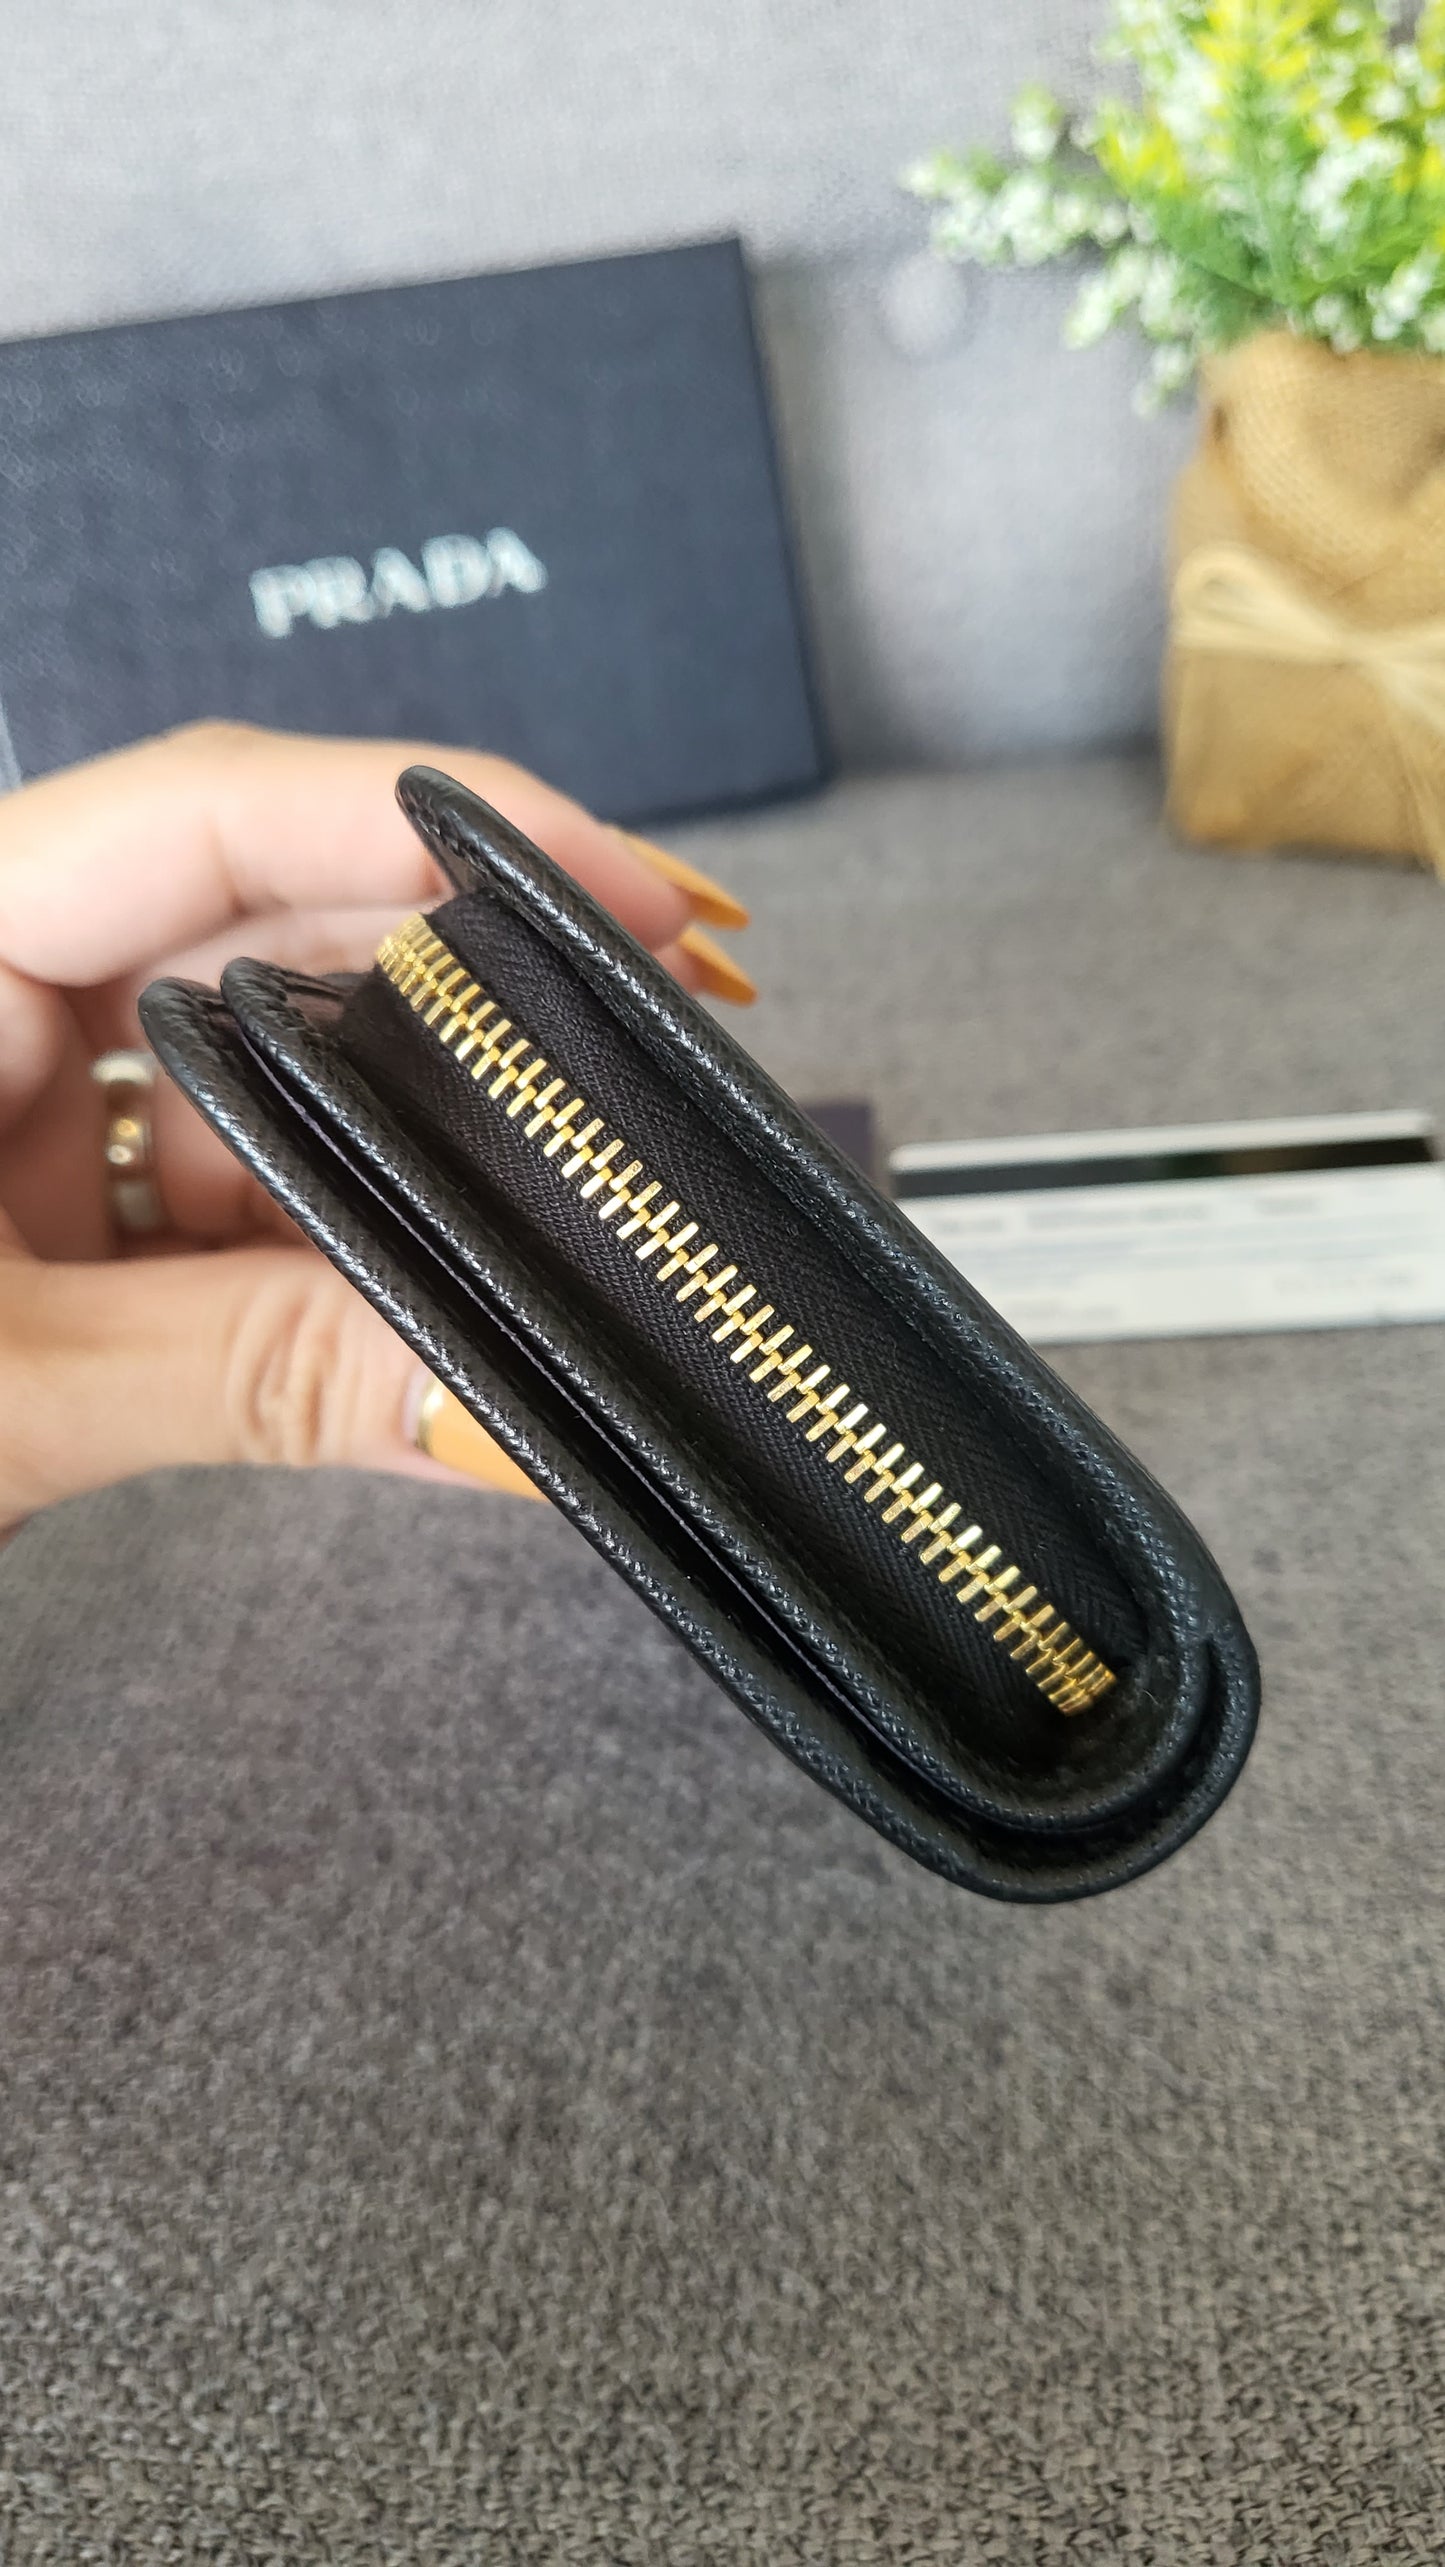 Prada Medium Saffiano Wallet